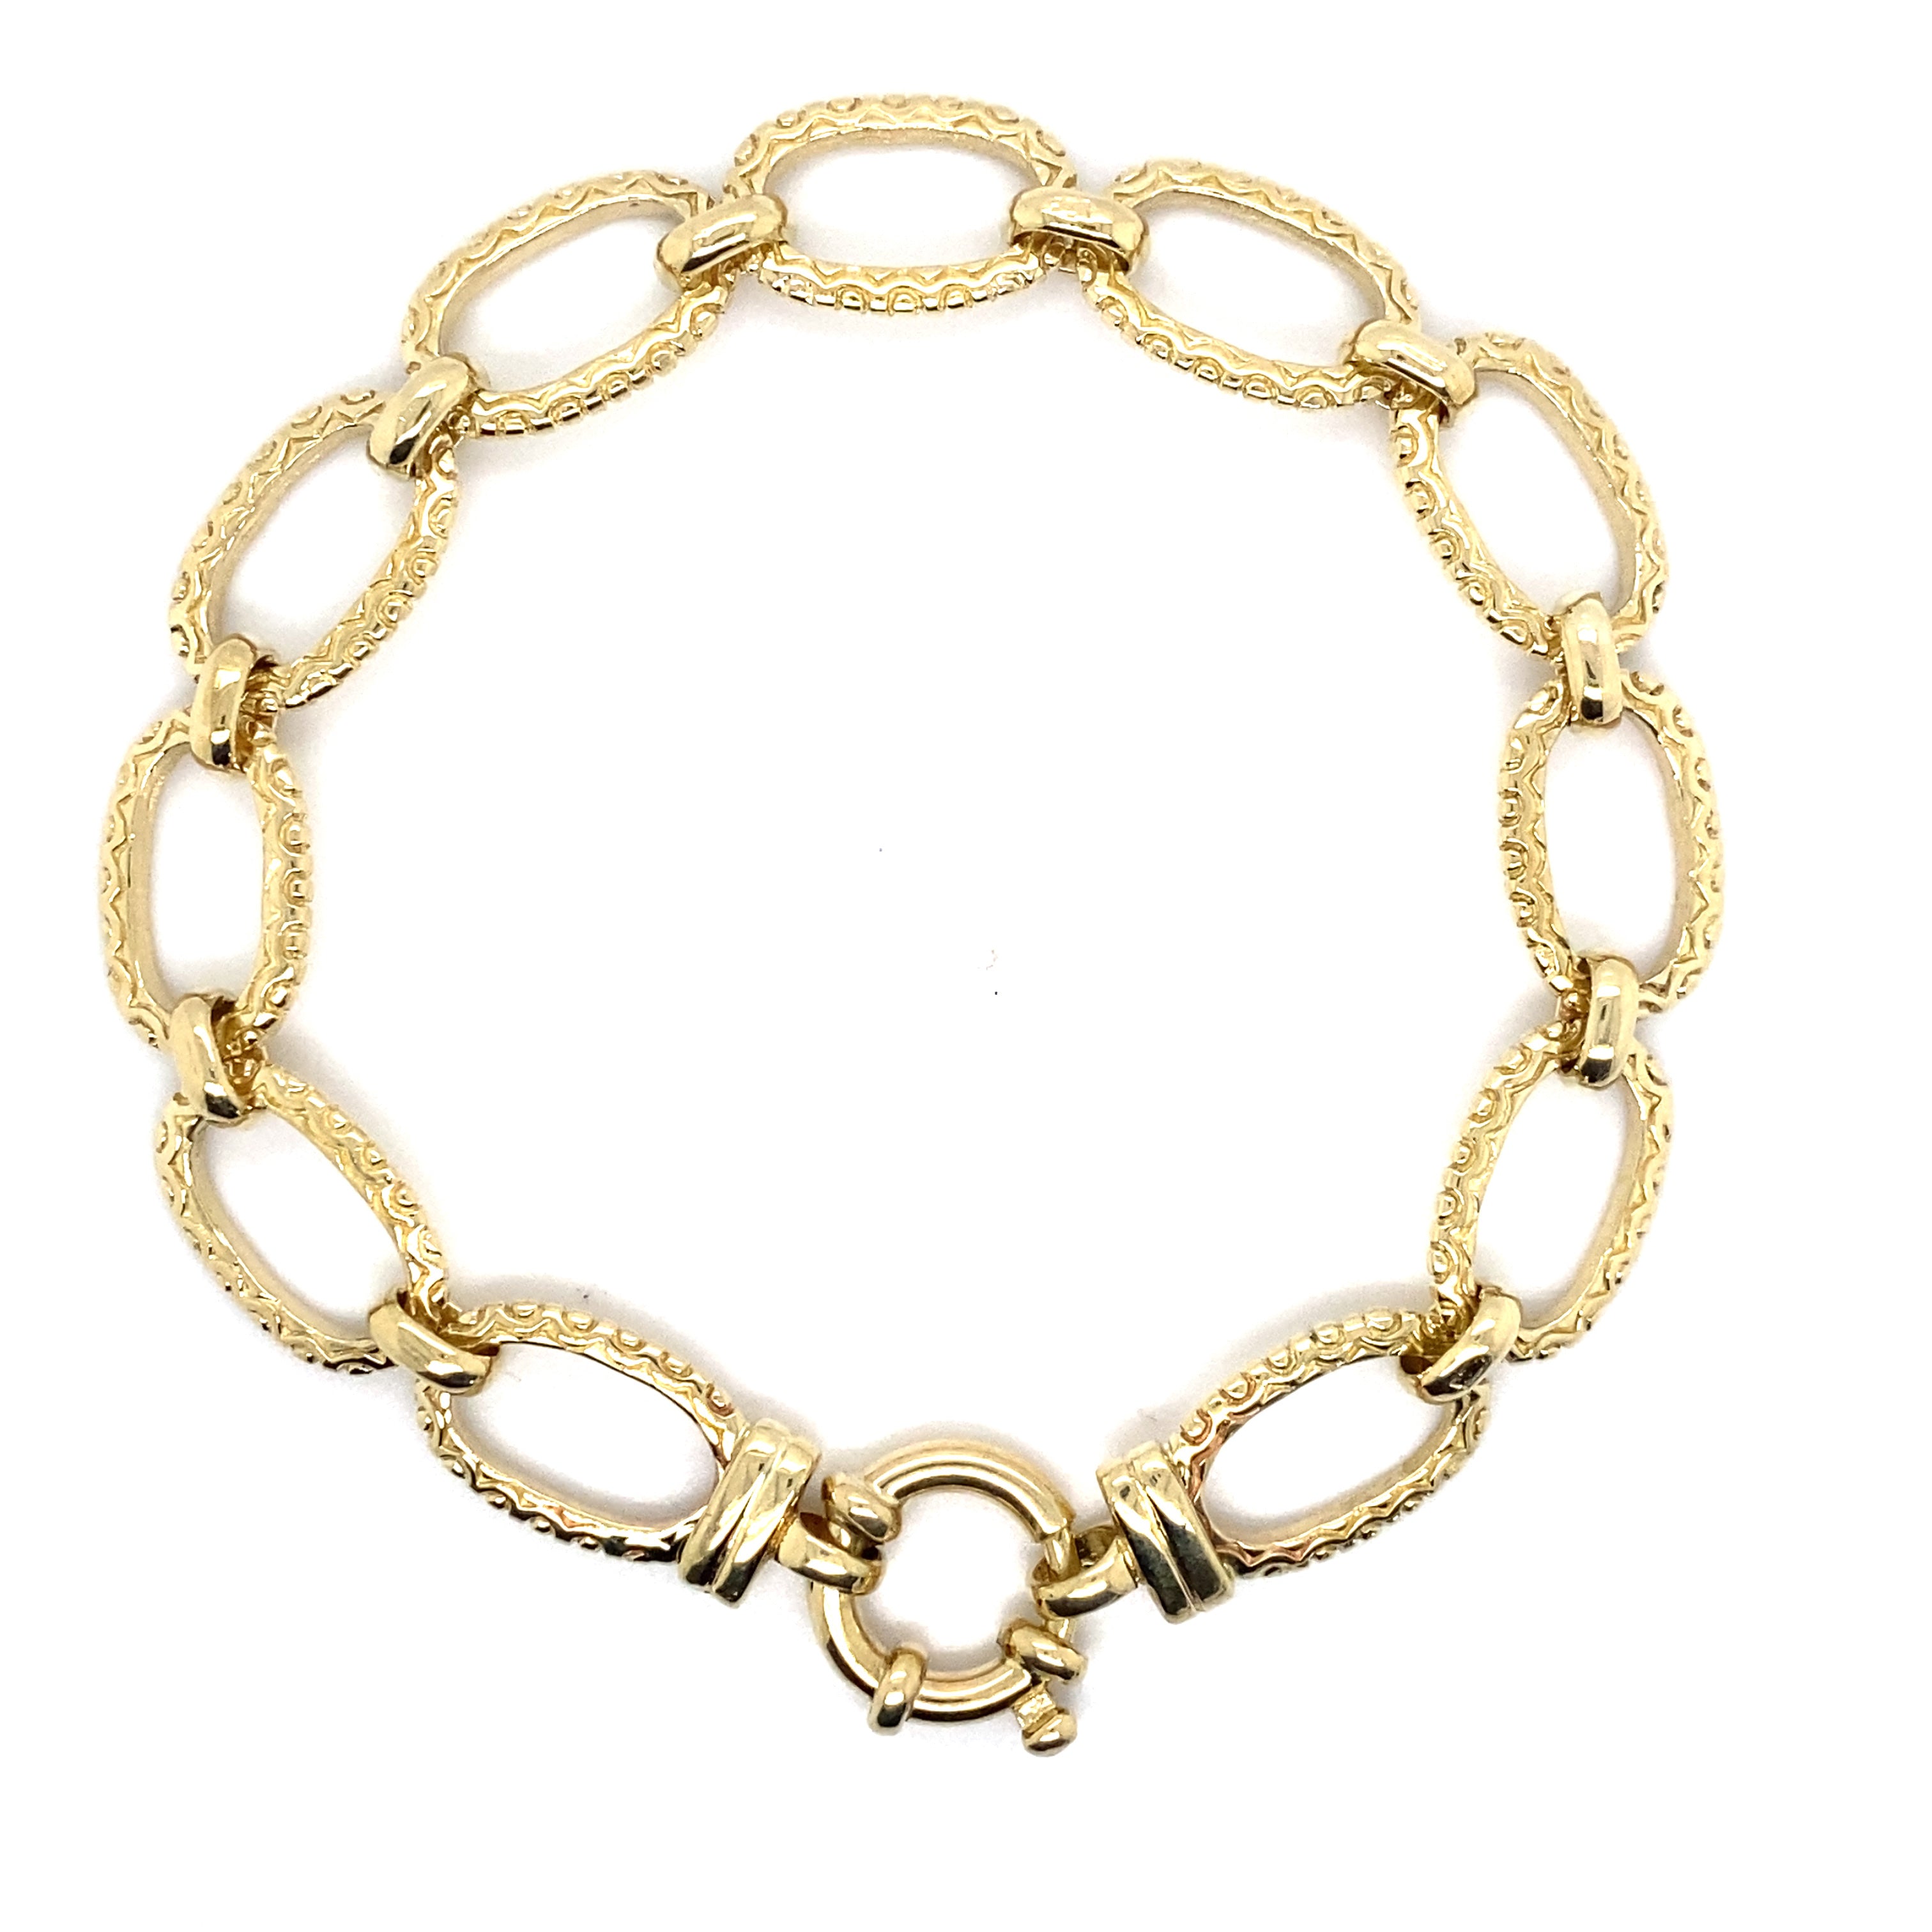 9ct yellow gold pattern bracelet